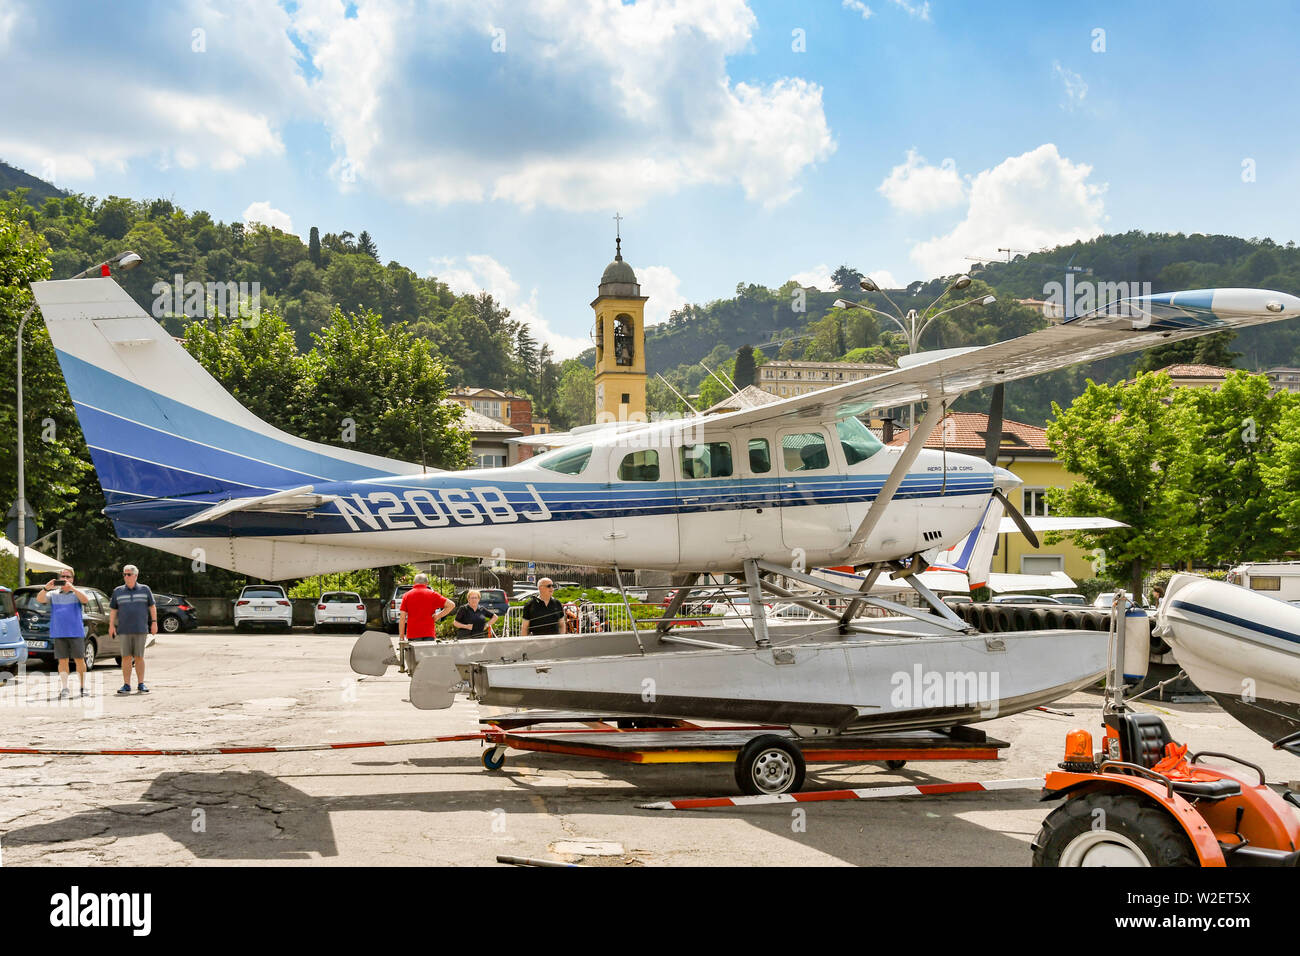 COMO, LAKE COMO, ITALY - JUNE 2019: Float plane operated by the Aero Club Como on the lakeside in the town of Como on Lake Como. Stock Photo